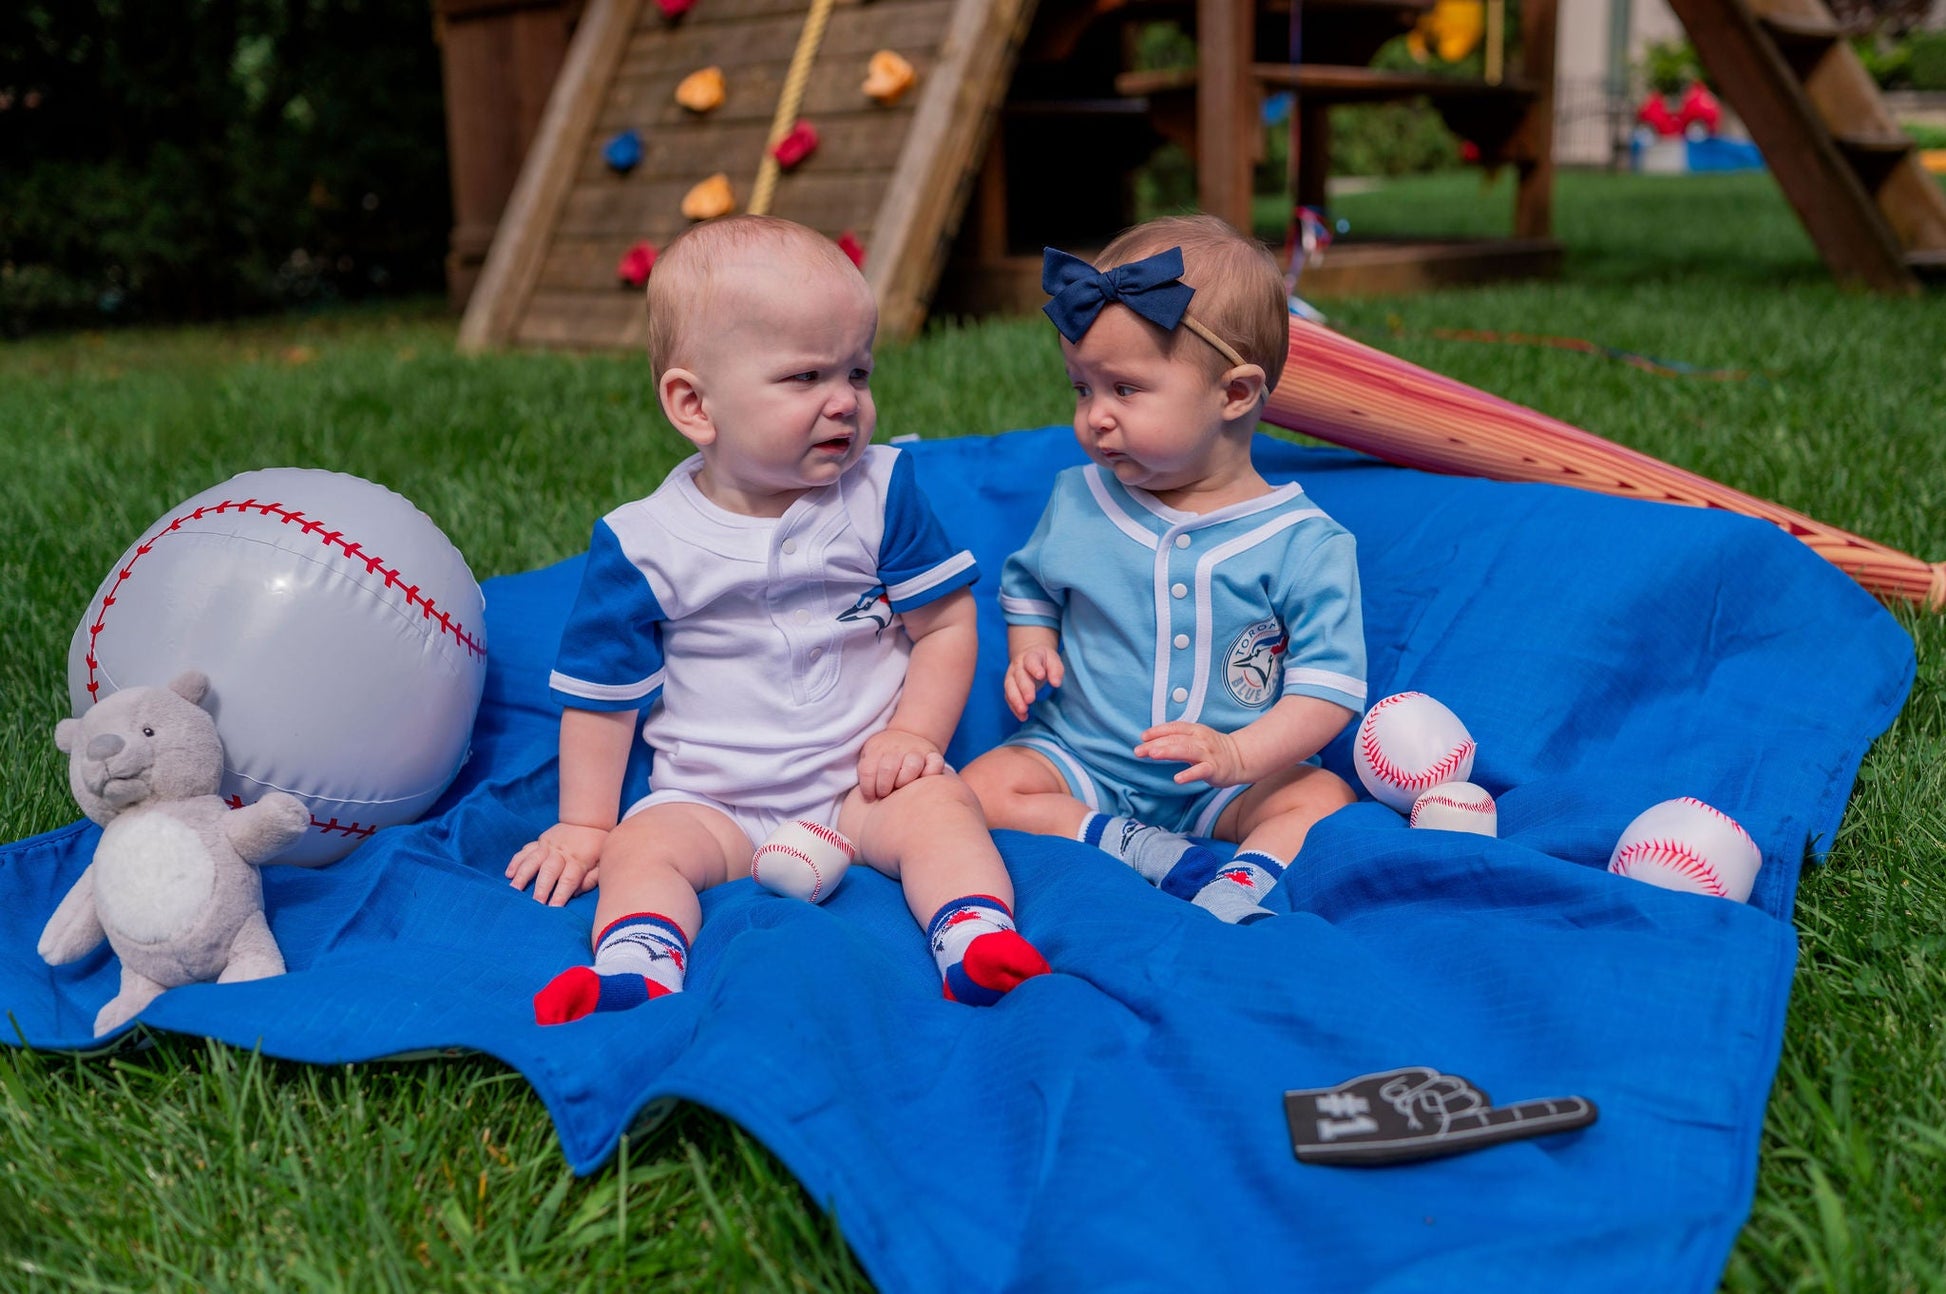 Gertex Customizable MLB Toronto Blue Jays Baby Powder Blue Romper